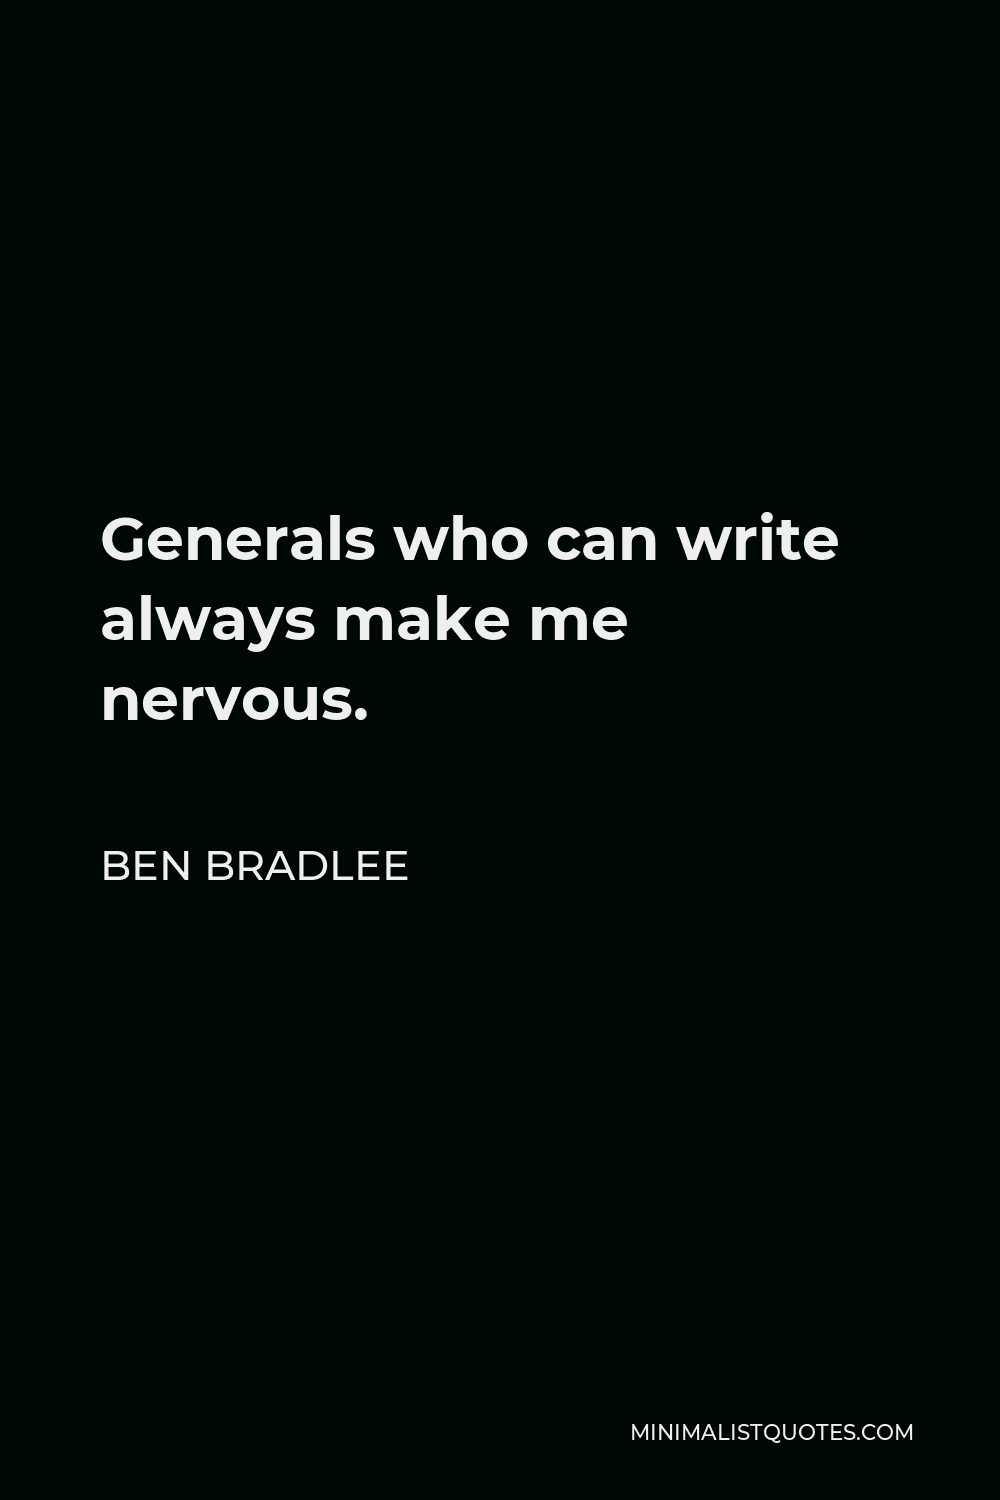 Ben Bradlee Quote - Generals who can write always make me nervous.